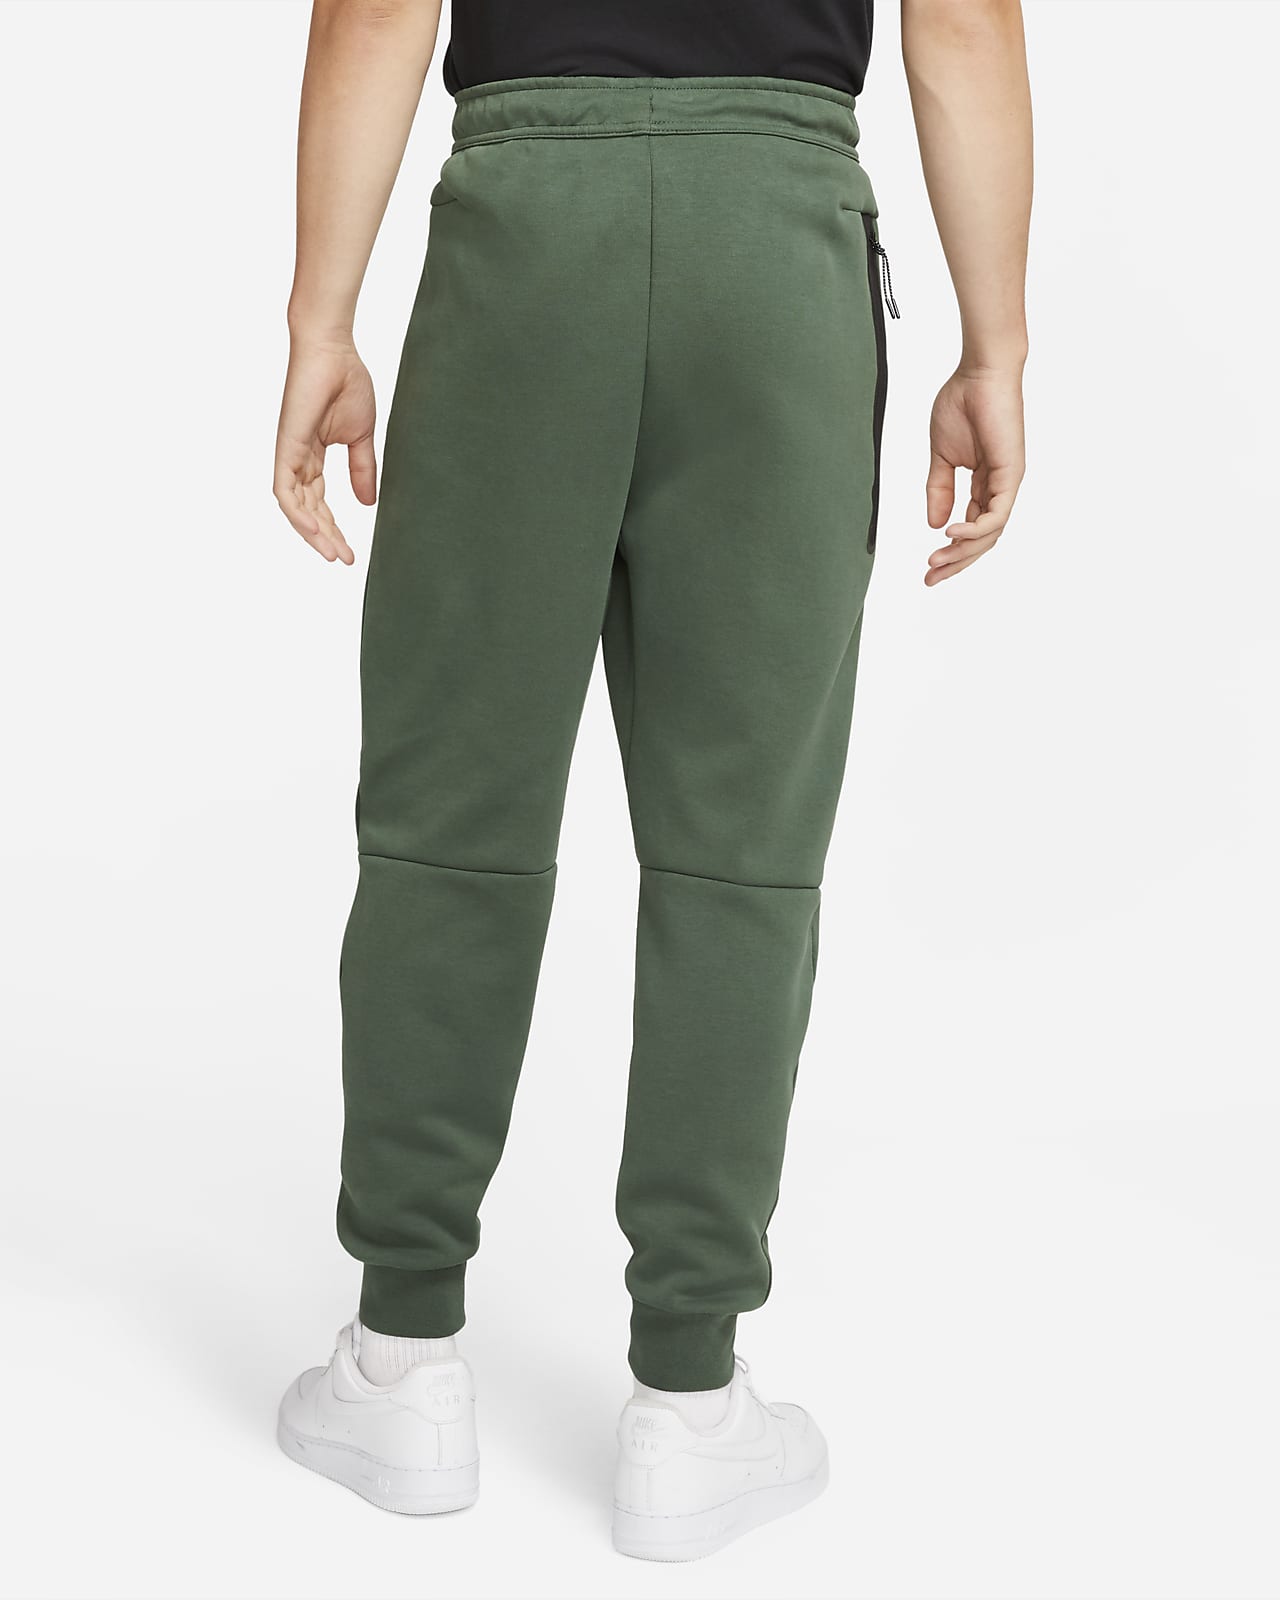 green nike tech fleece pants